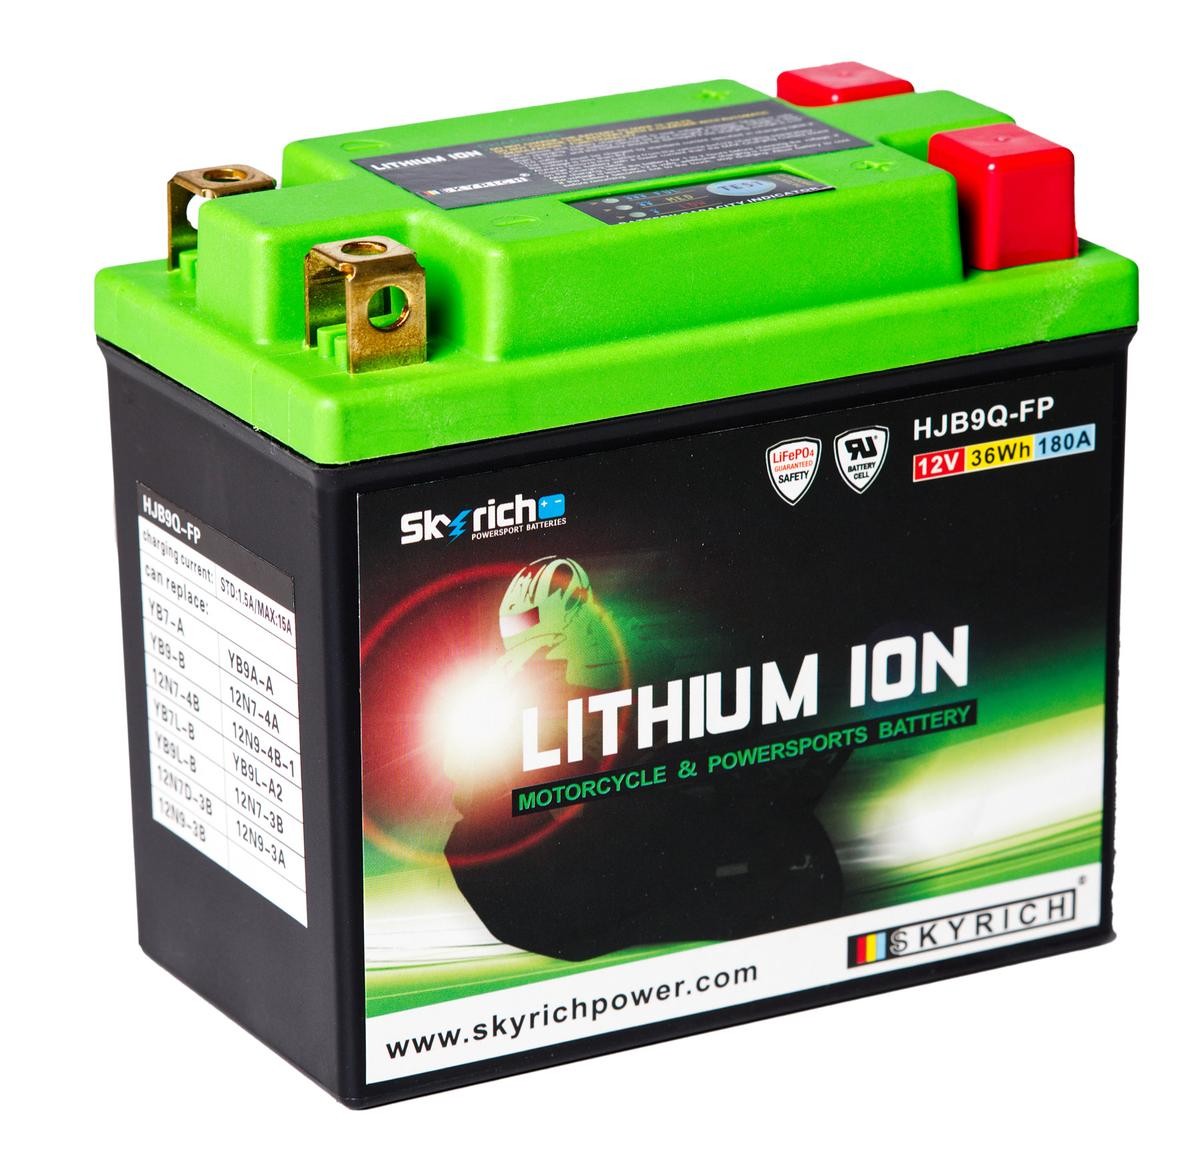 Batterie HJB9Q-FP Niedrige Preise - Jetzt kaufen!